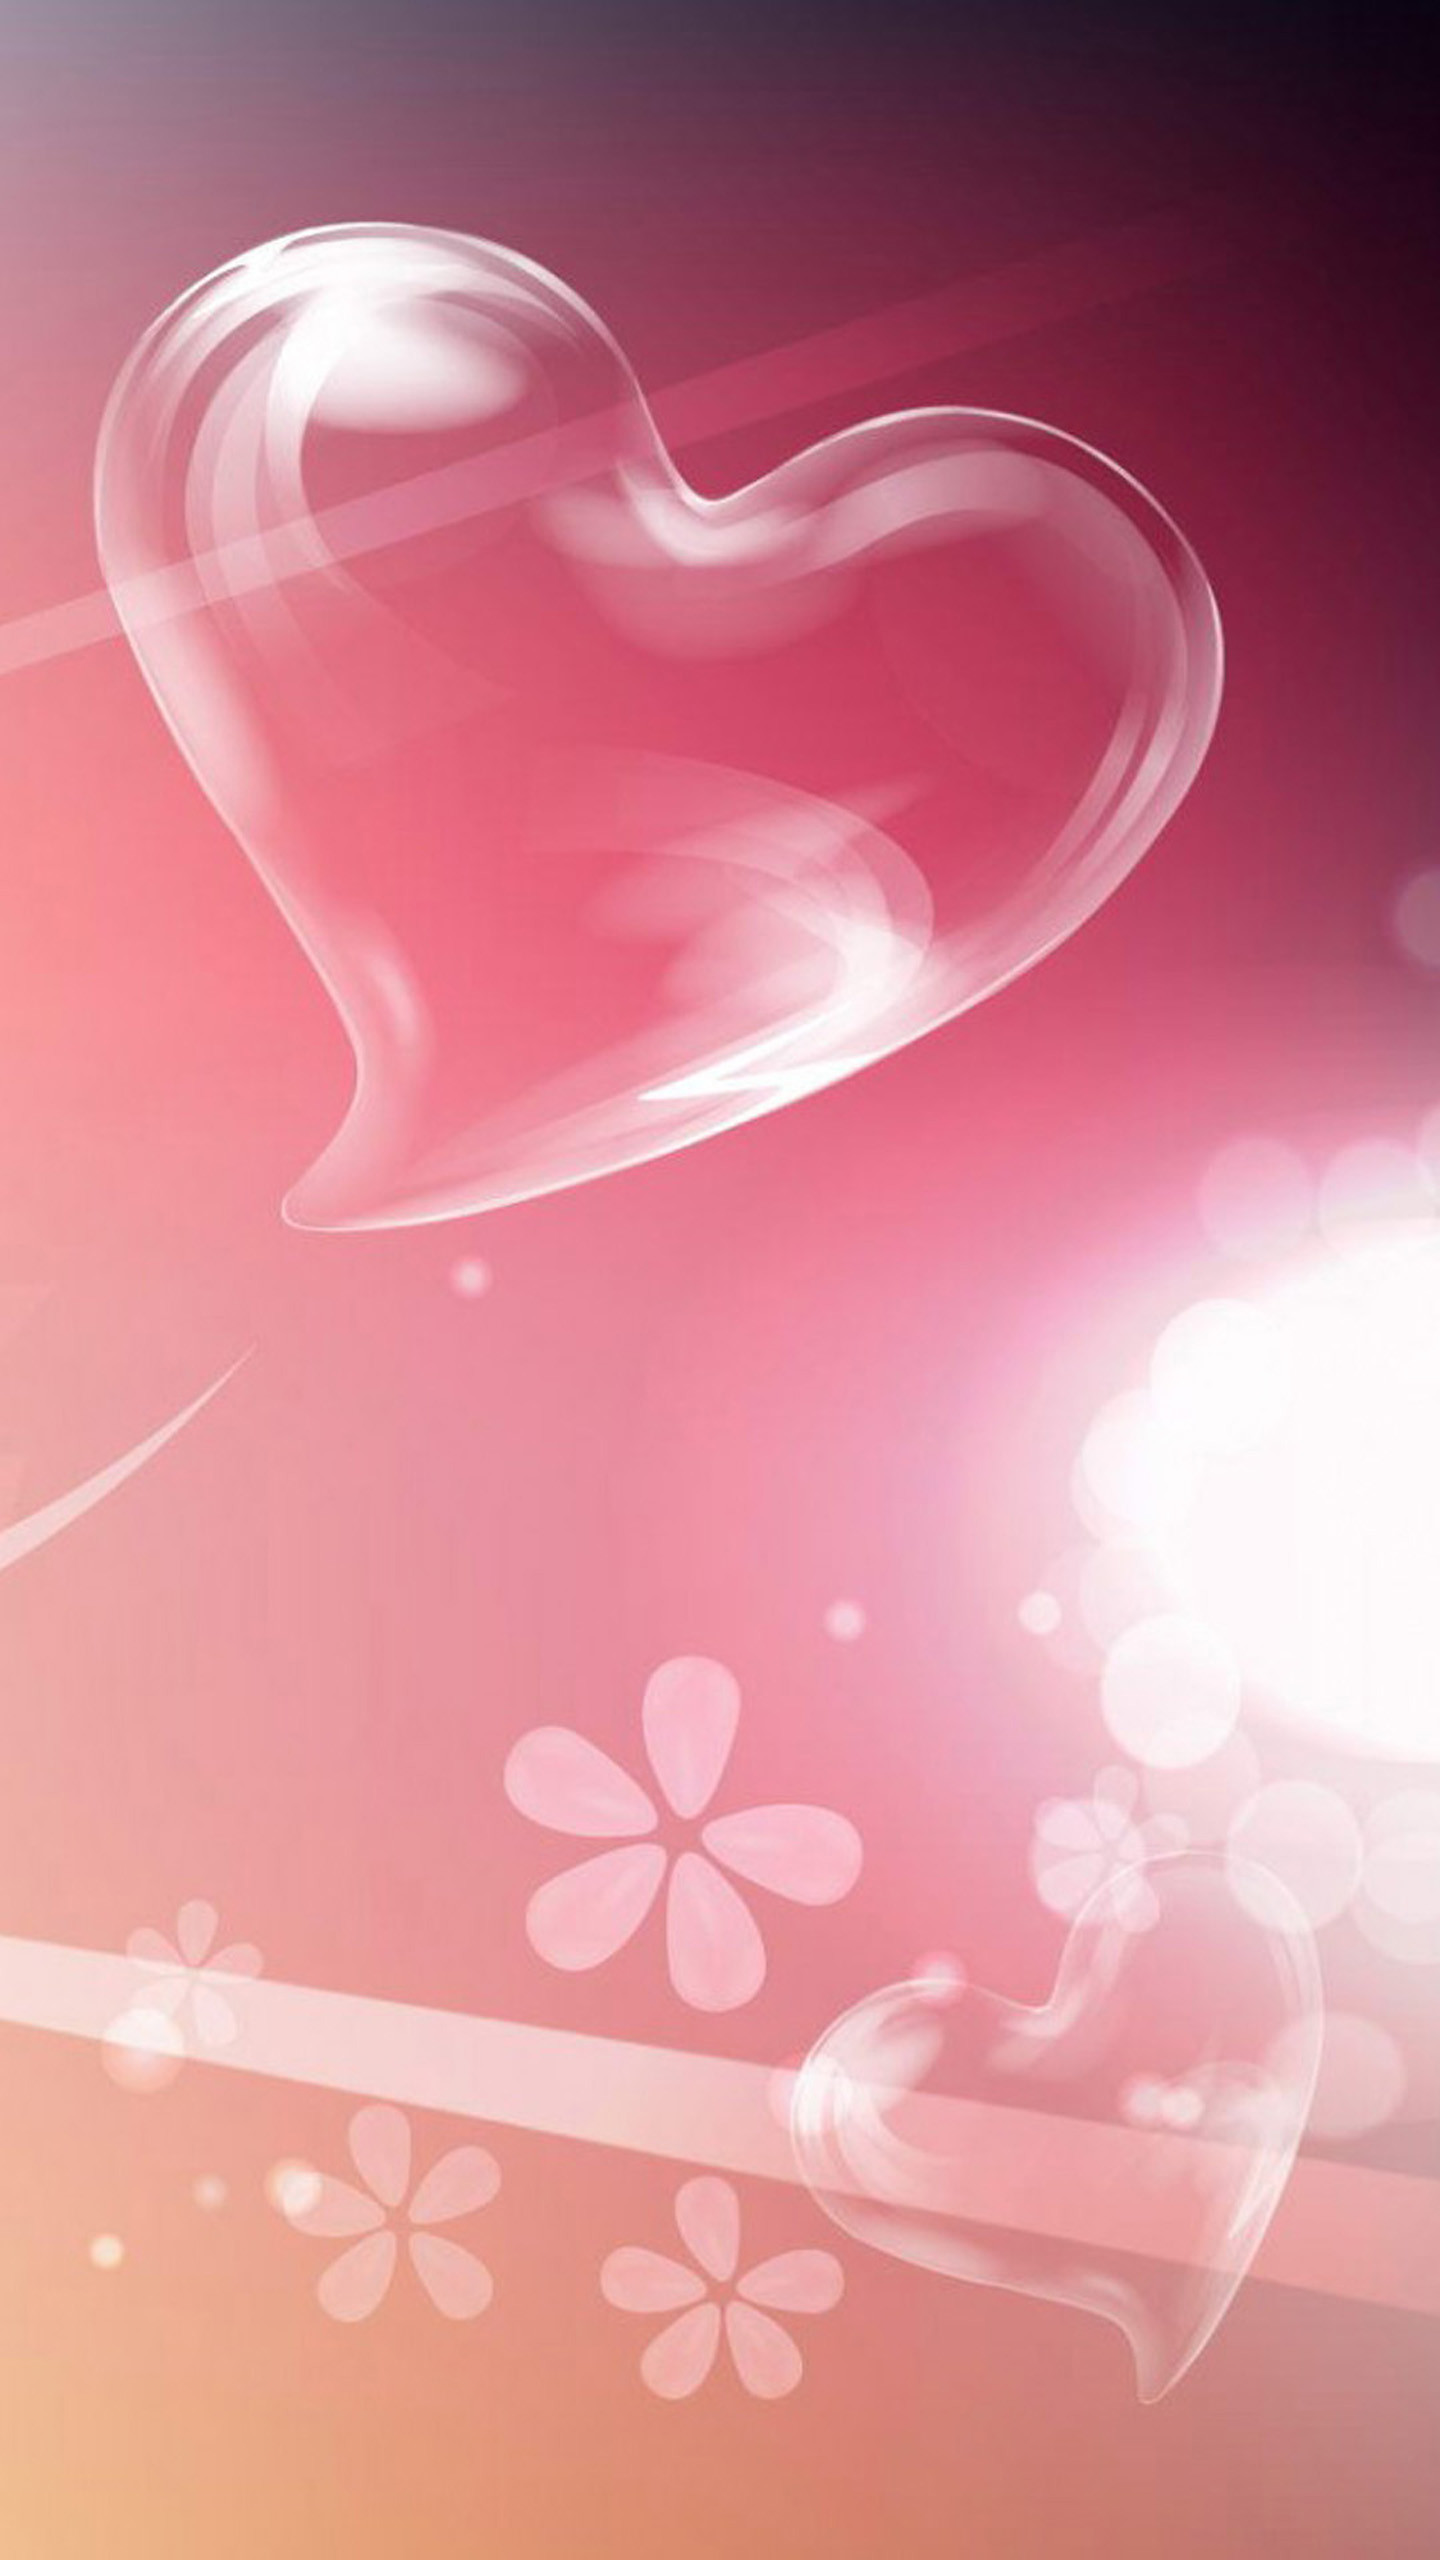 1440x Pink Love Heart Bubble Mobile Wallpaper Wallpaper For Mobile